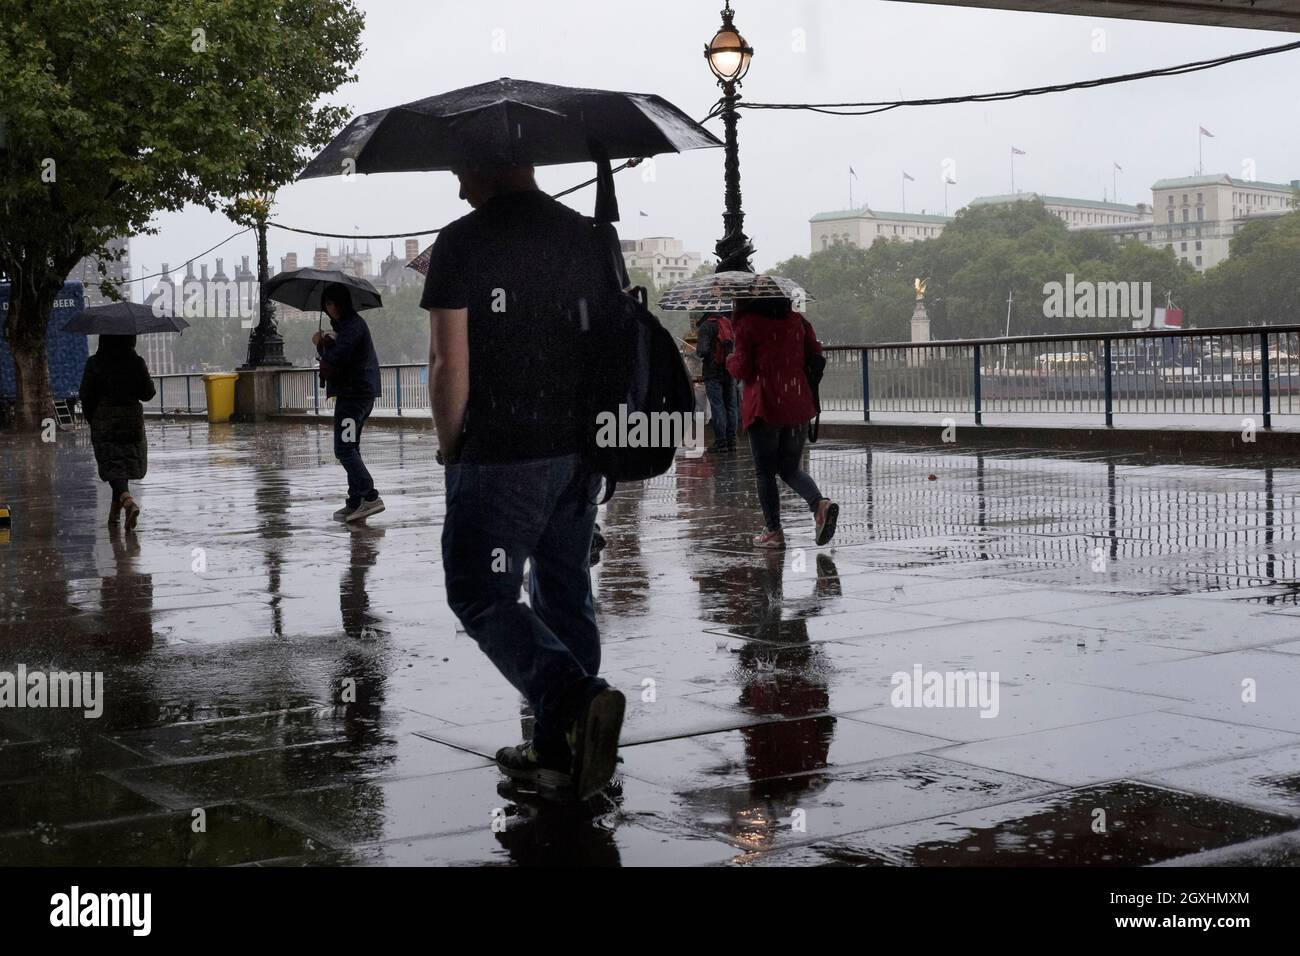 London pedestrians walking in downpour of rain. Stock Photo